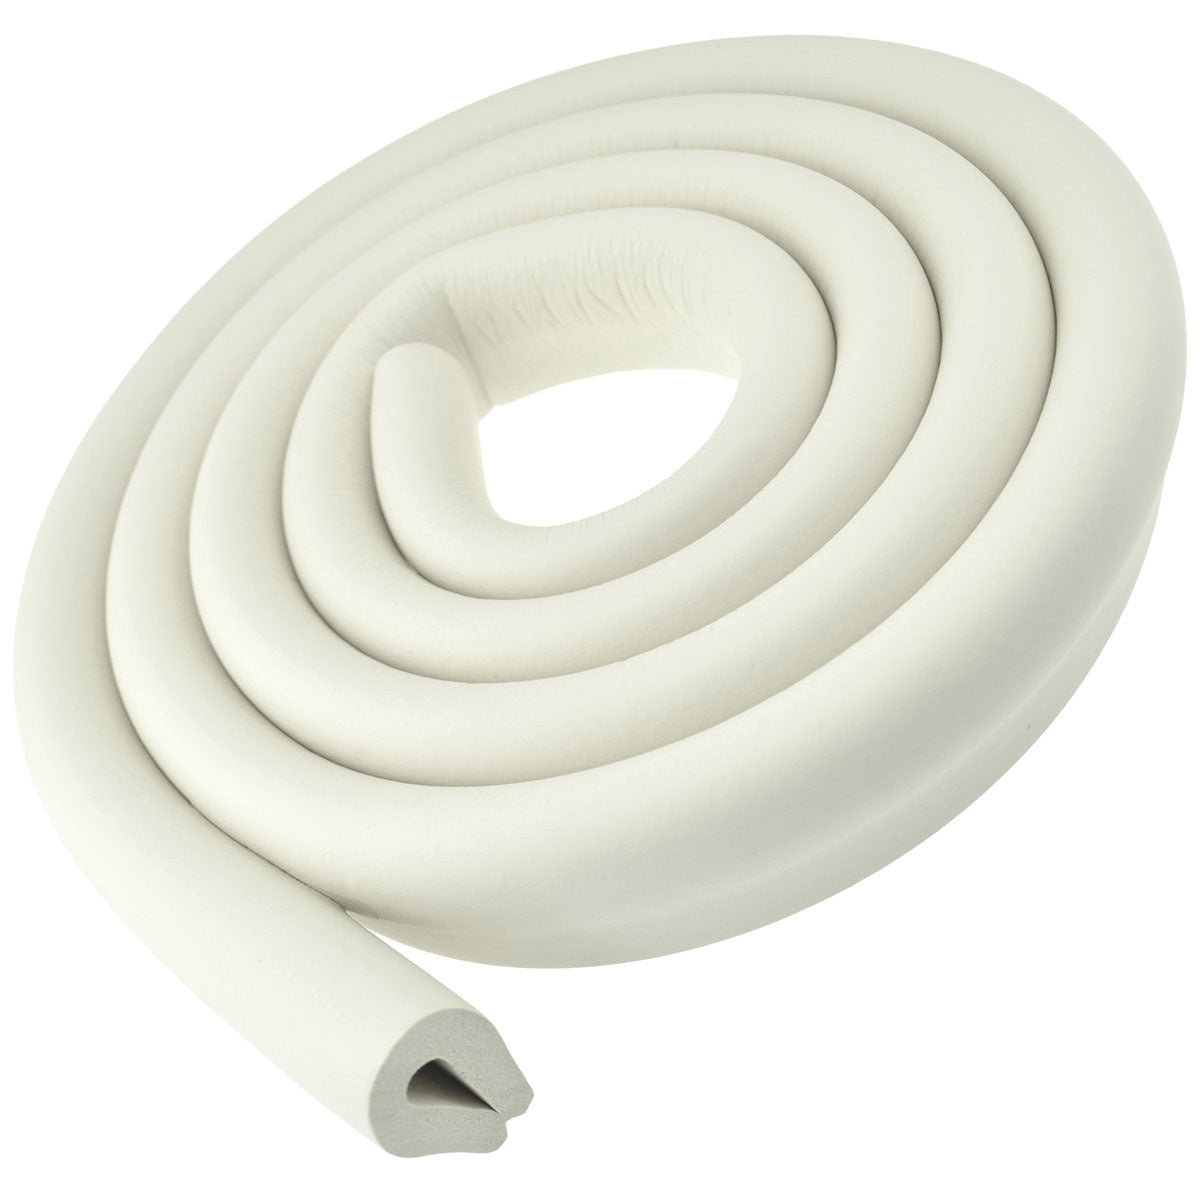 1 Roll White U-Shaped Foam Edge Protector 78.7 inches (2 meters)